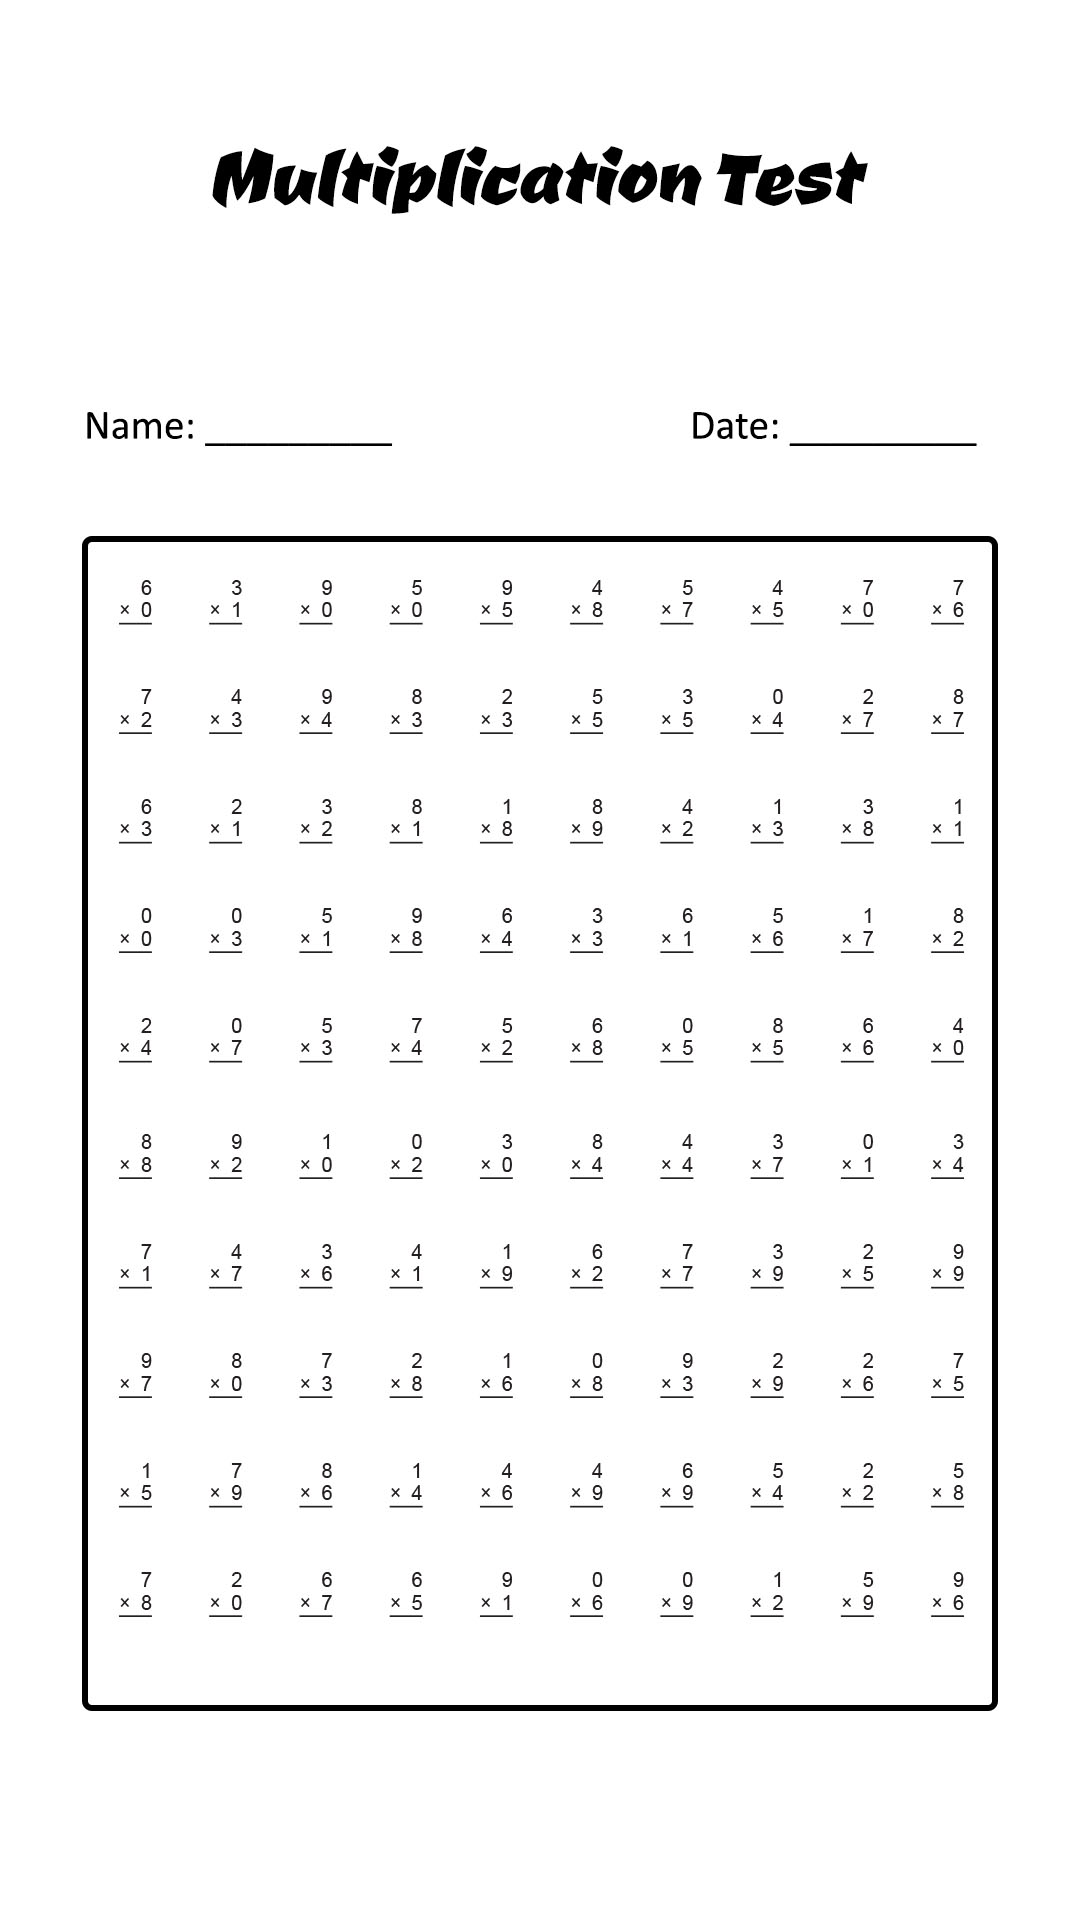 multiplication-timed-test-printable-printable-templates